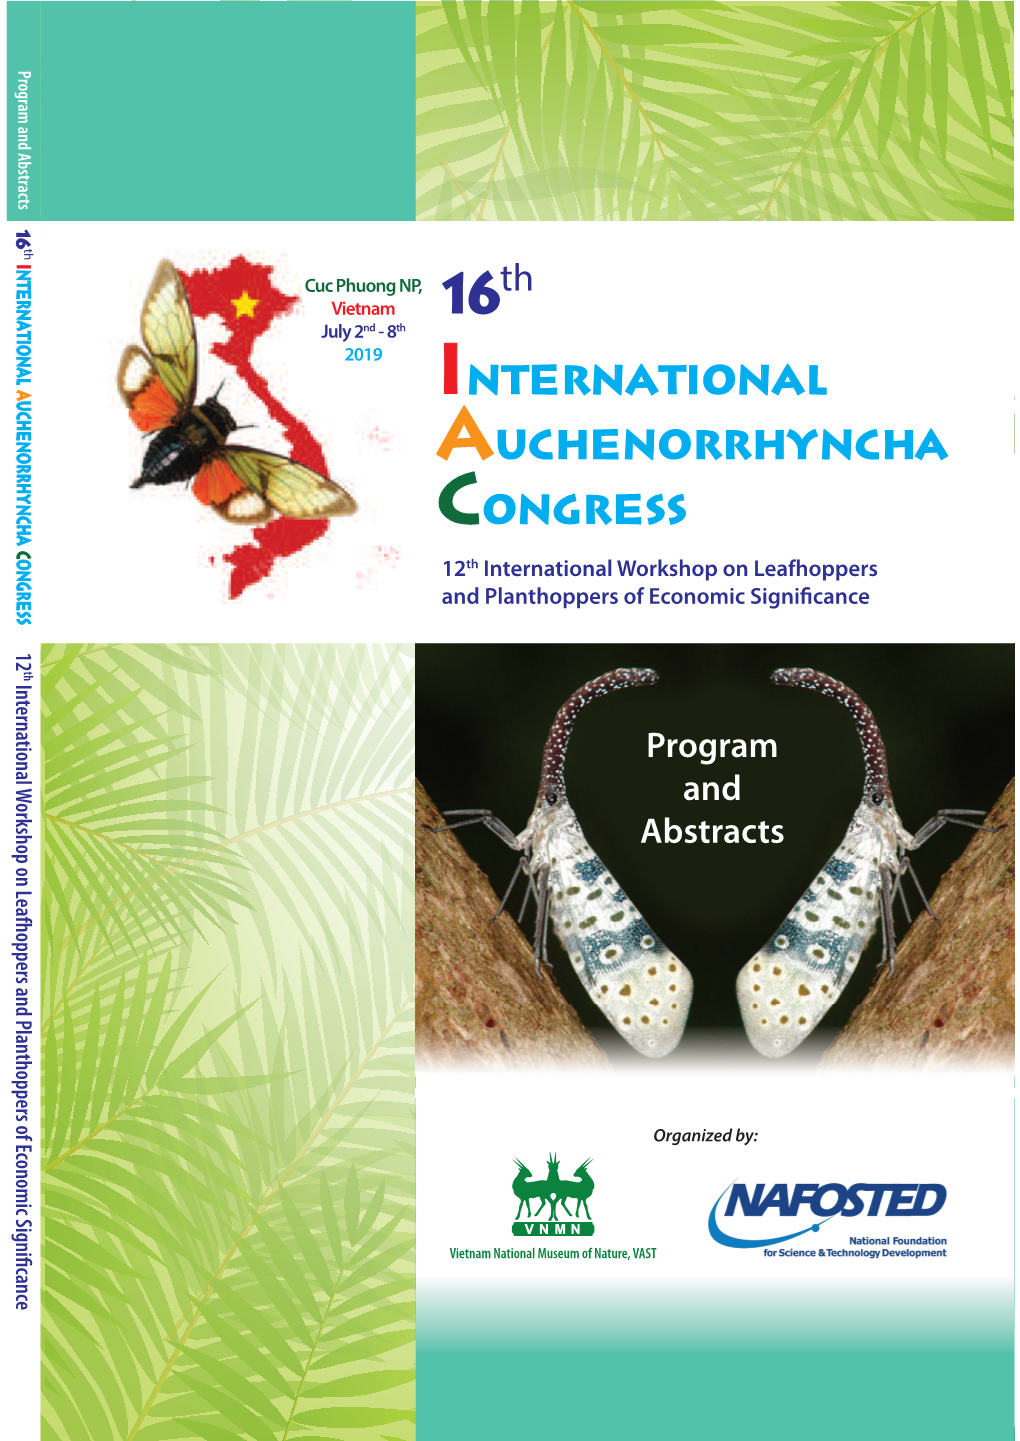 International Auchenorrhyncha Congress